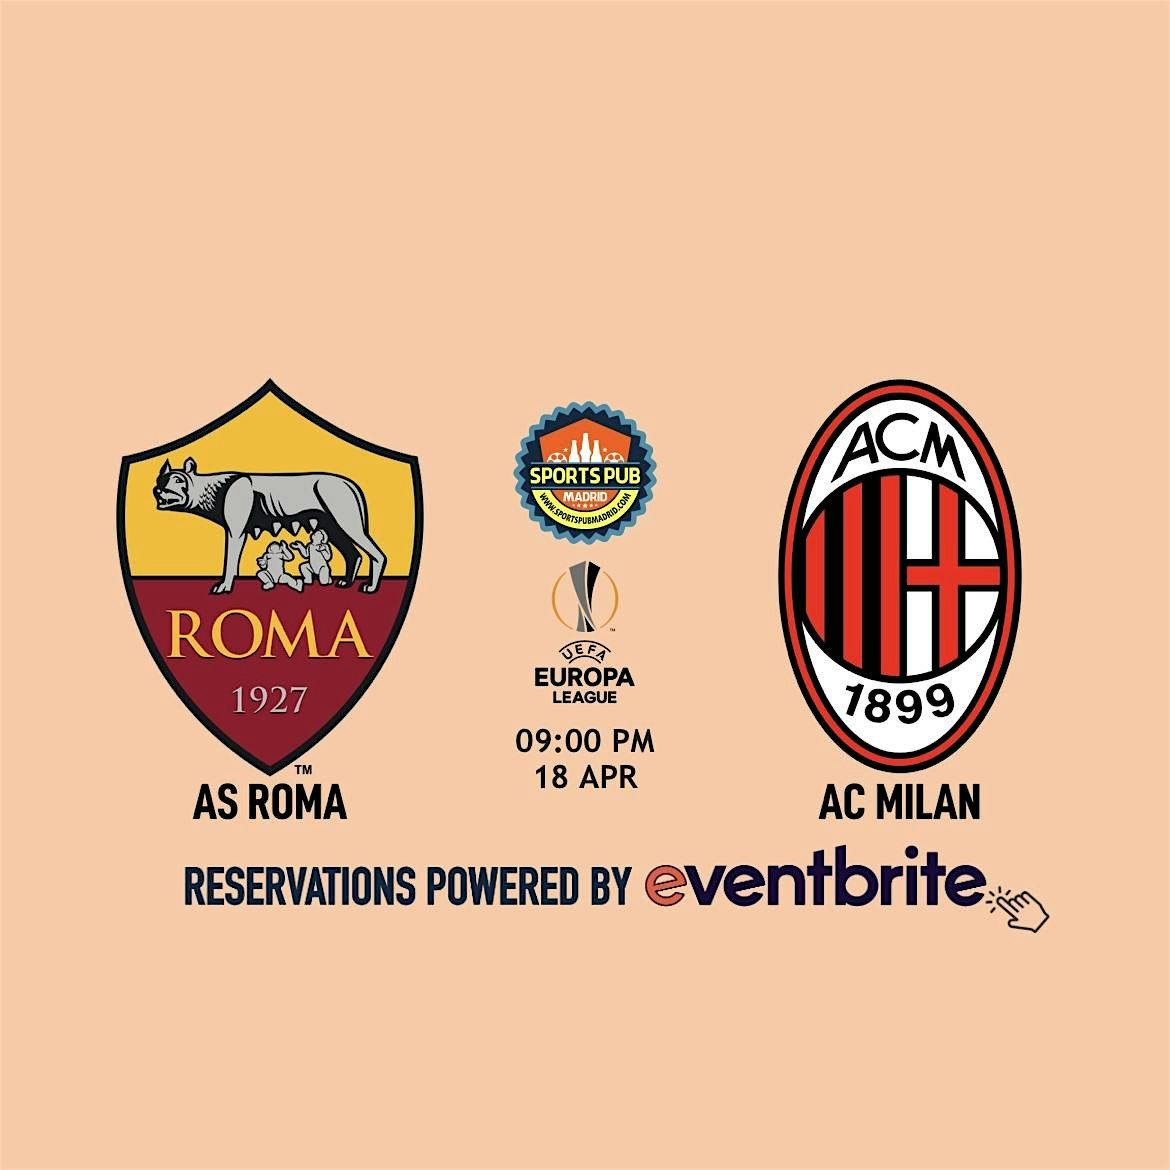 AS Roma v AC Milan | Europa League - Sports Pub Malasa\u00f1a